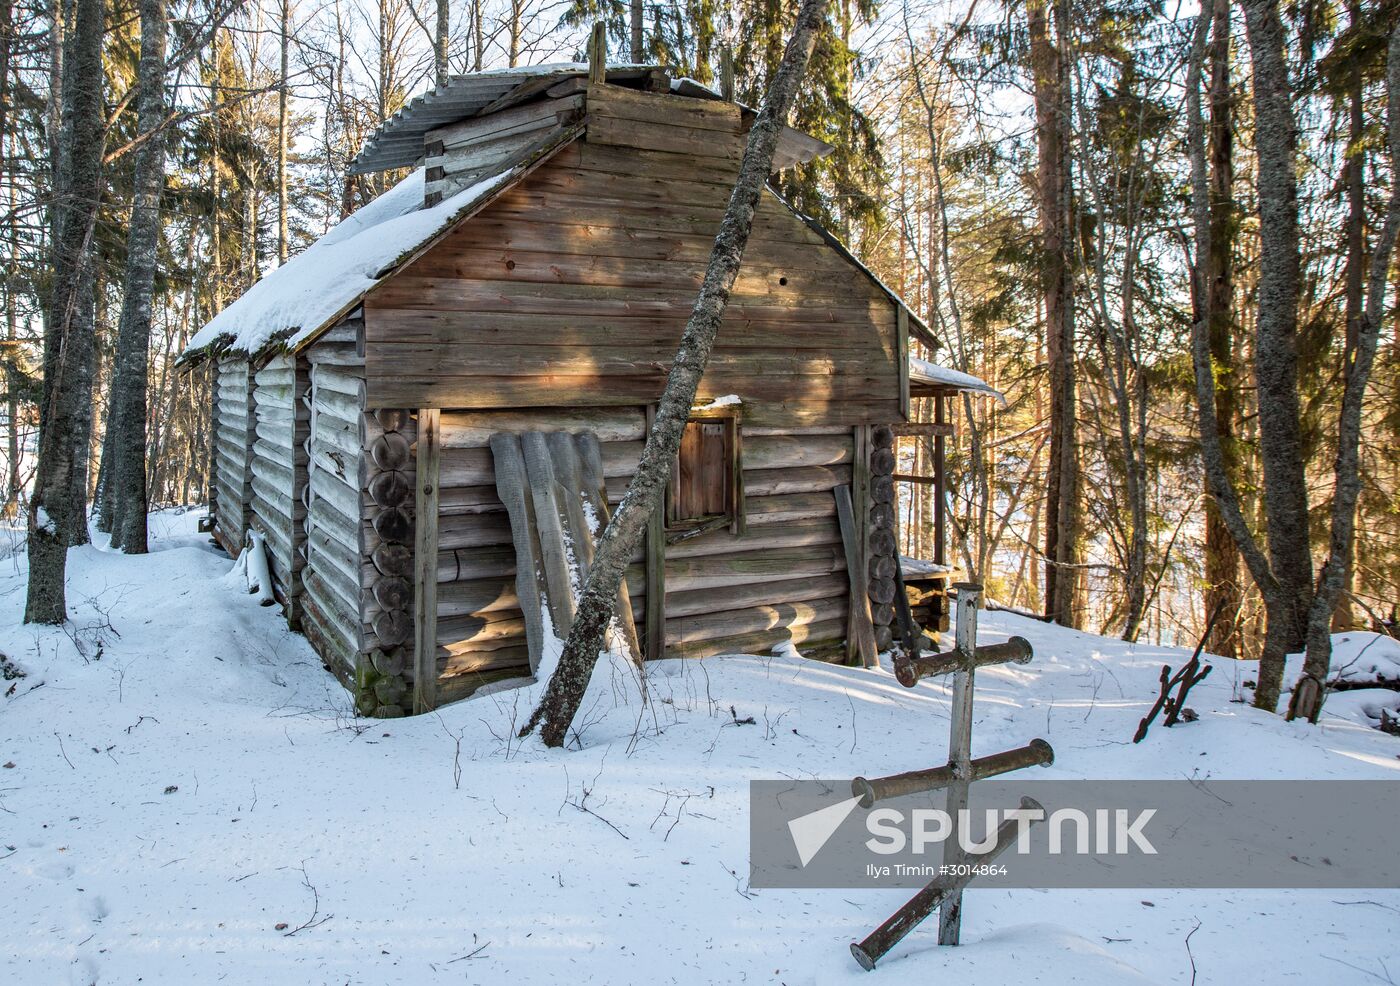 Orthodox Christian shrines in Karelia